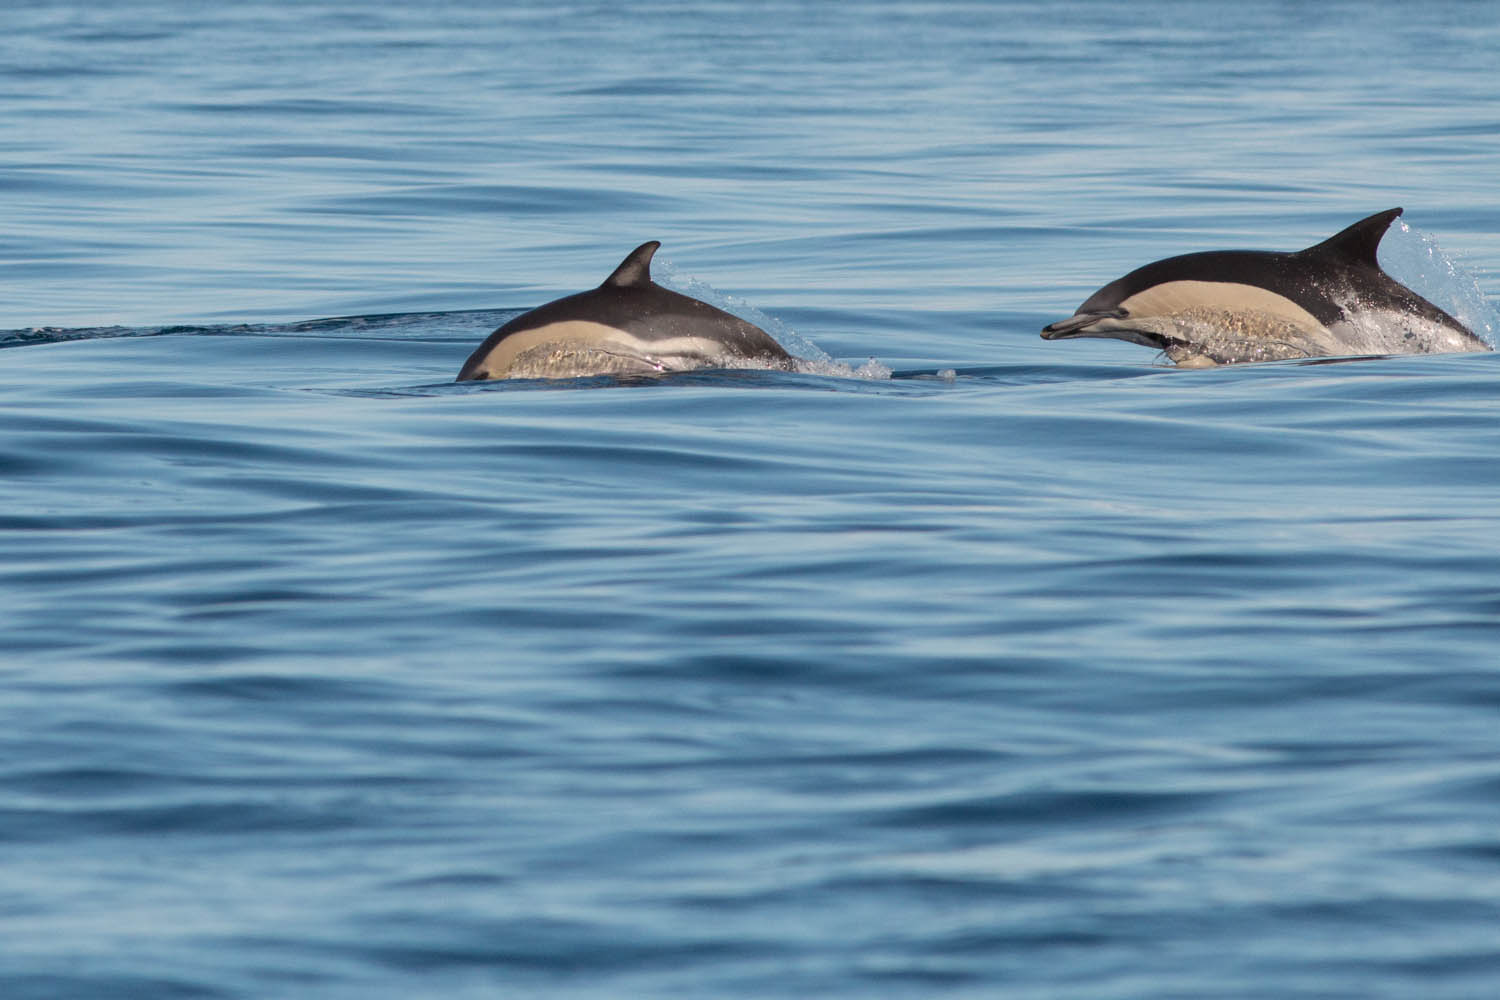 Voyage photo - Le Grand Cachalot des Açores. Dauphins communs © Stéphanie Vigetta -Wild Seas Explorer